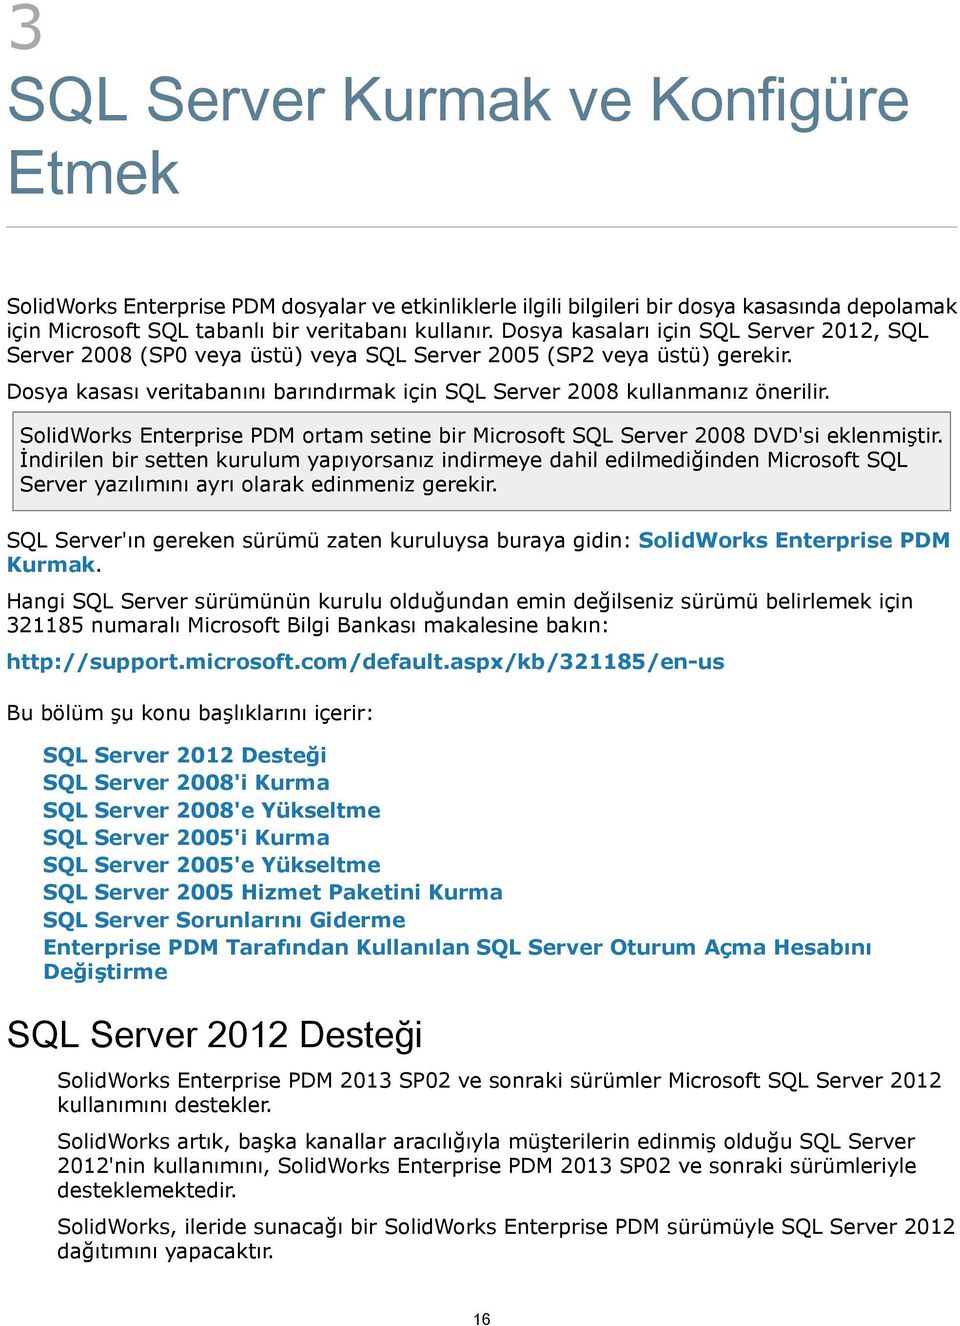 SolidWorks Enterprise PDM ortam setine bir Microsoft SQL Server 2008 DVD'si eklenmiştir.